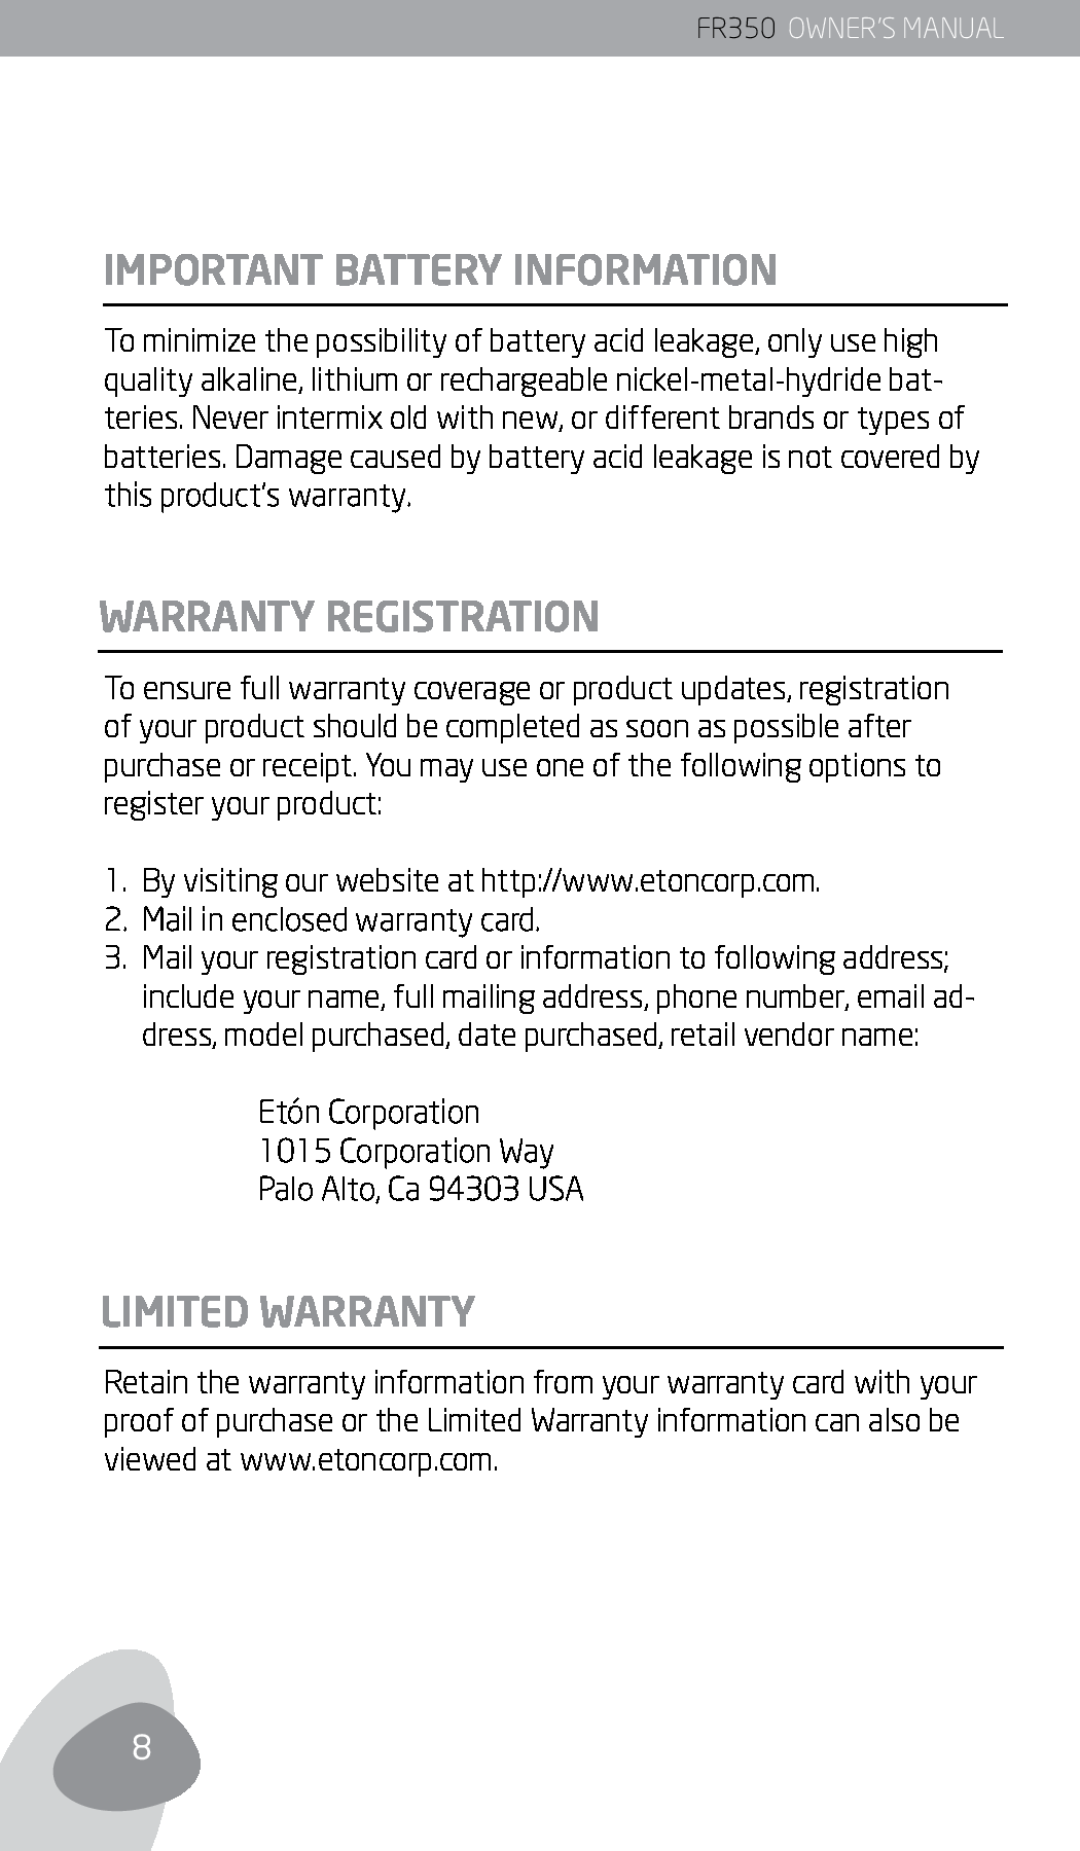 Eton FR350 owner manual Important Battery Information, Warranty Registration, Limited Warranty 